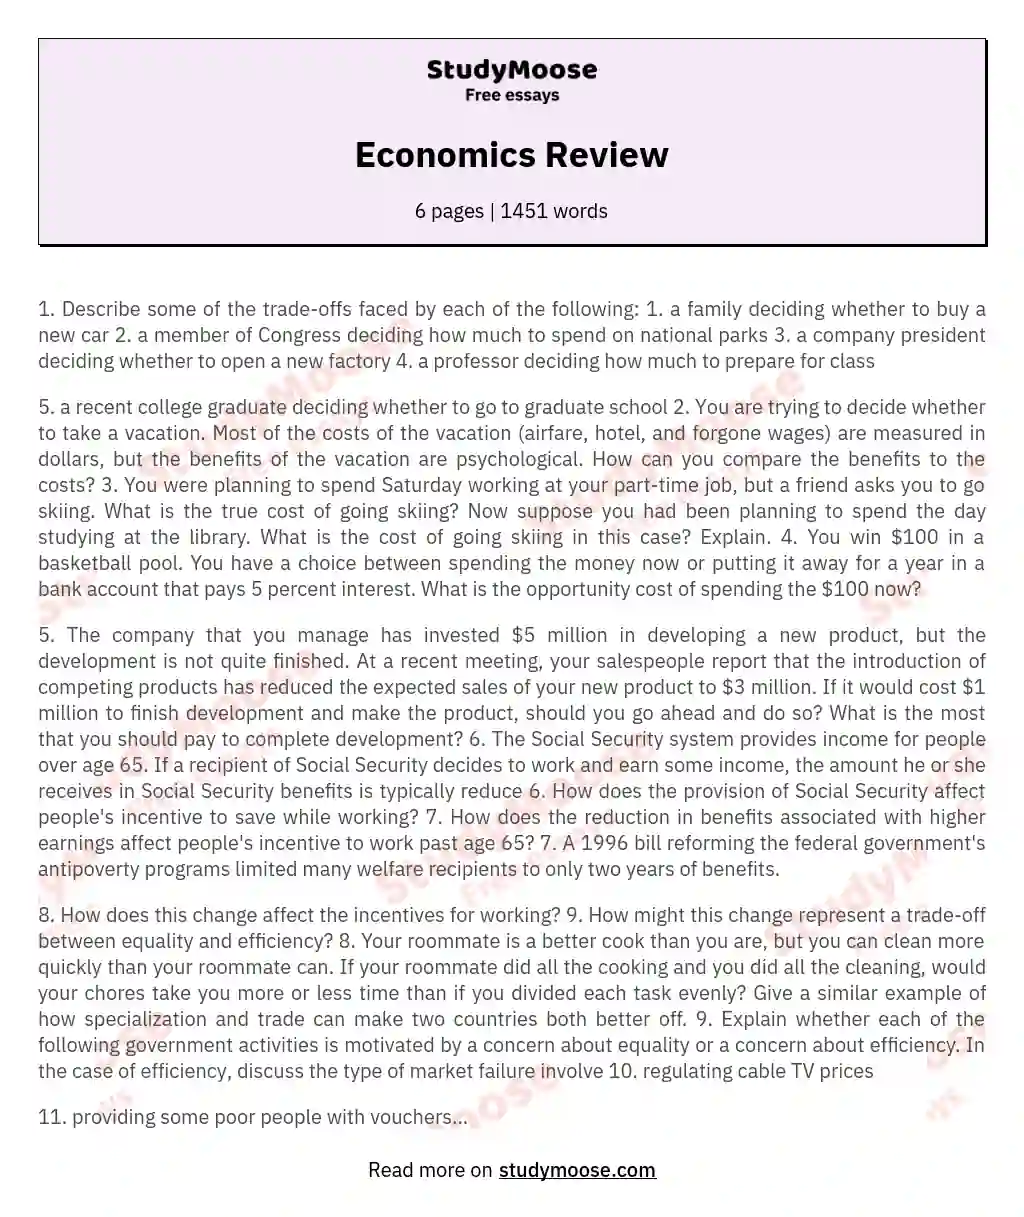 Economics Review